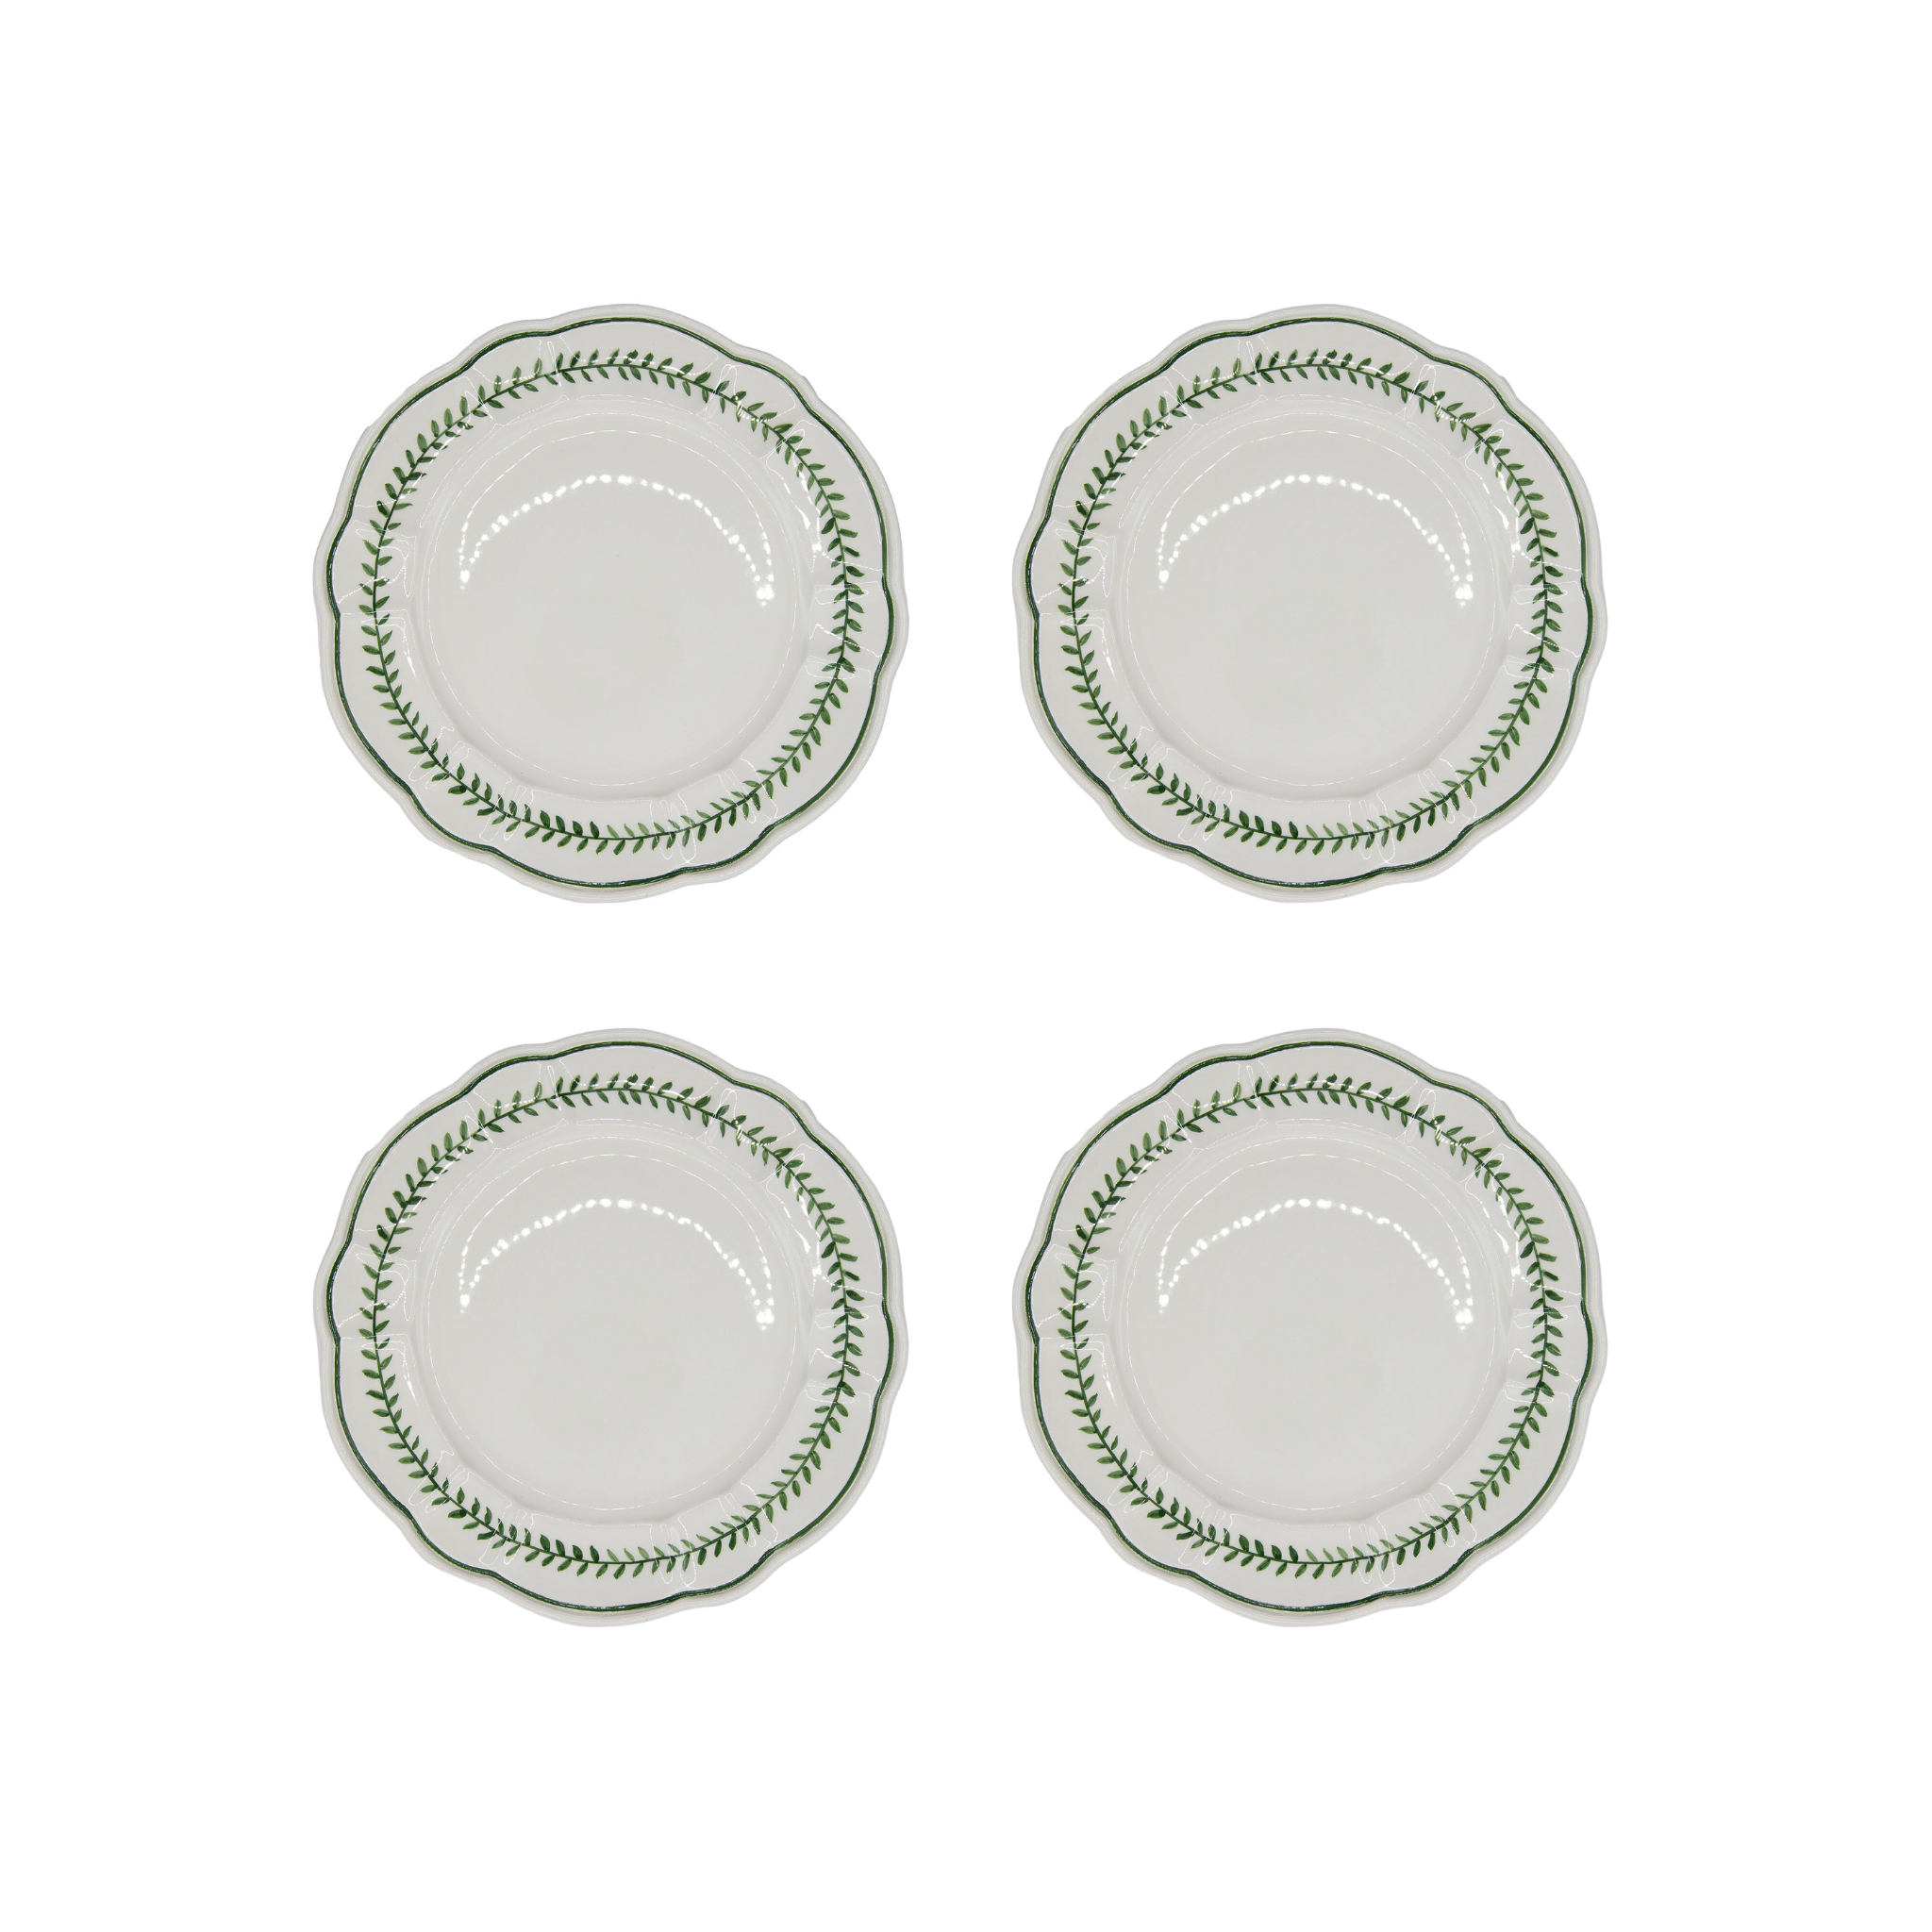 Achille Side Plate, Green, Set of 4 - Skye McAlpine Tavola